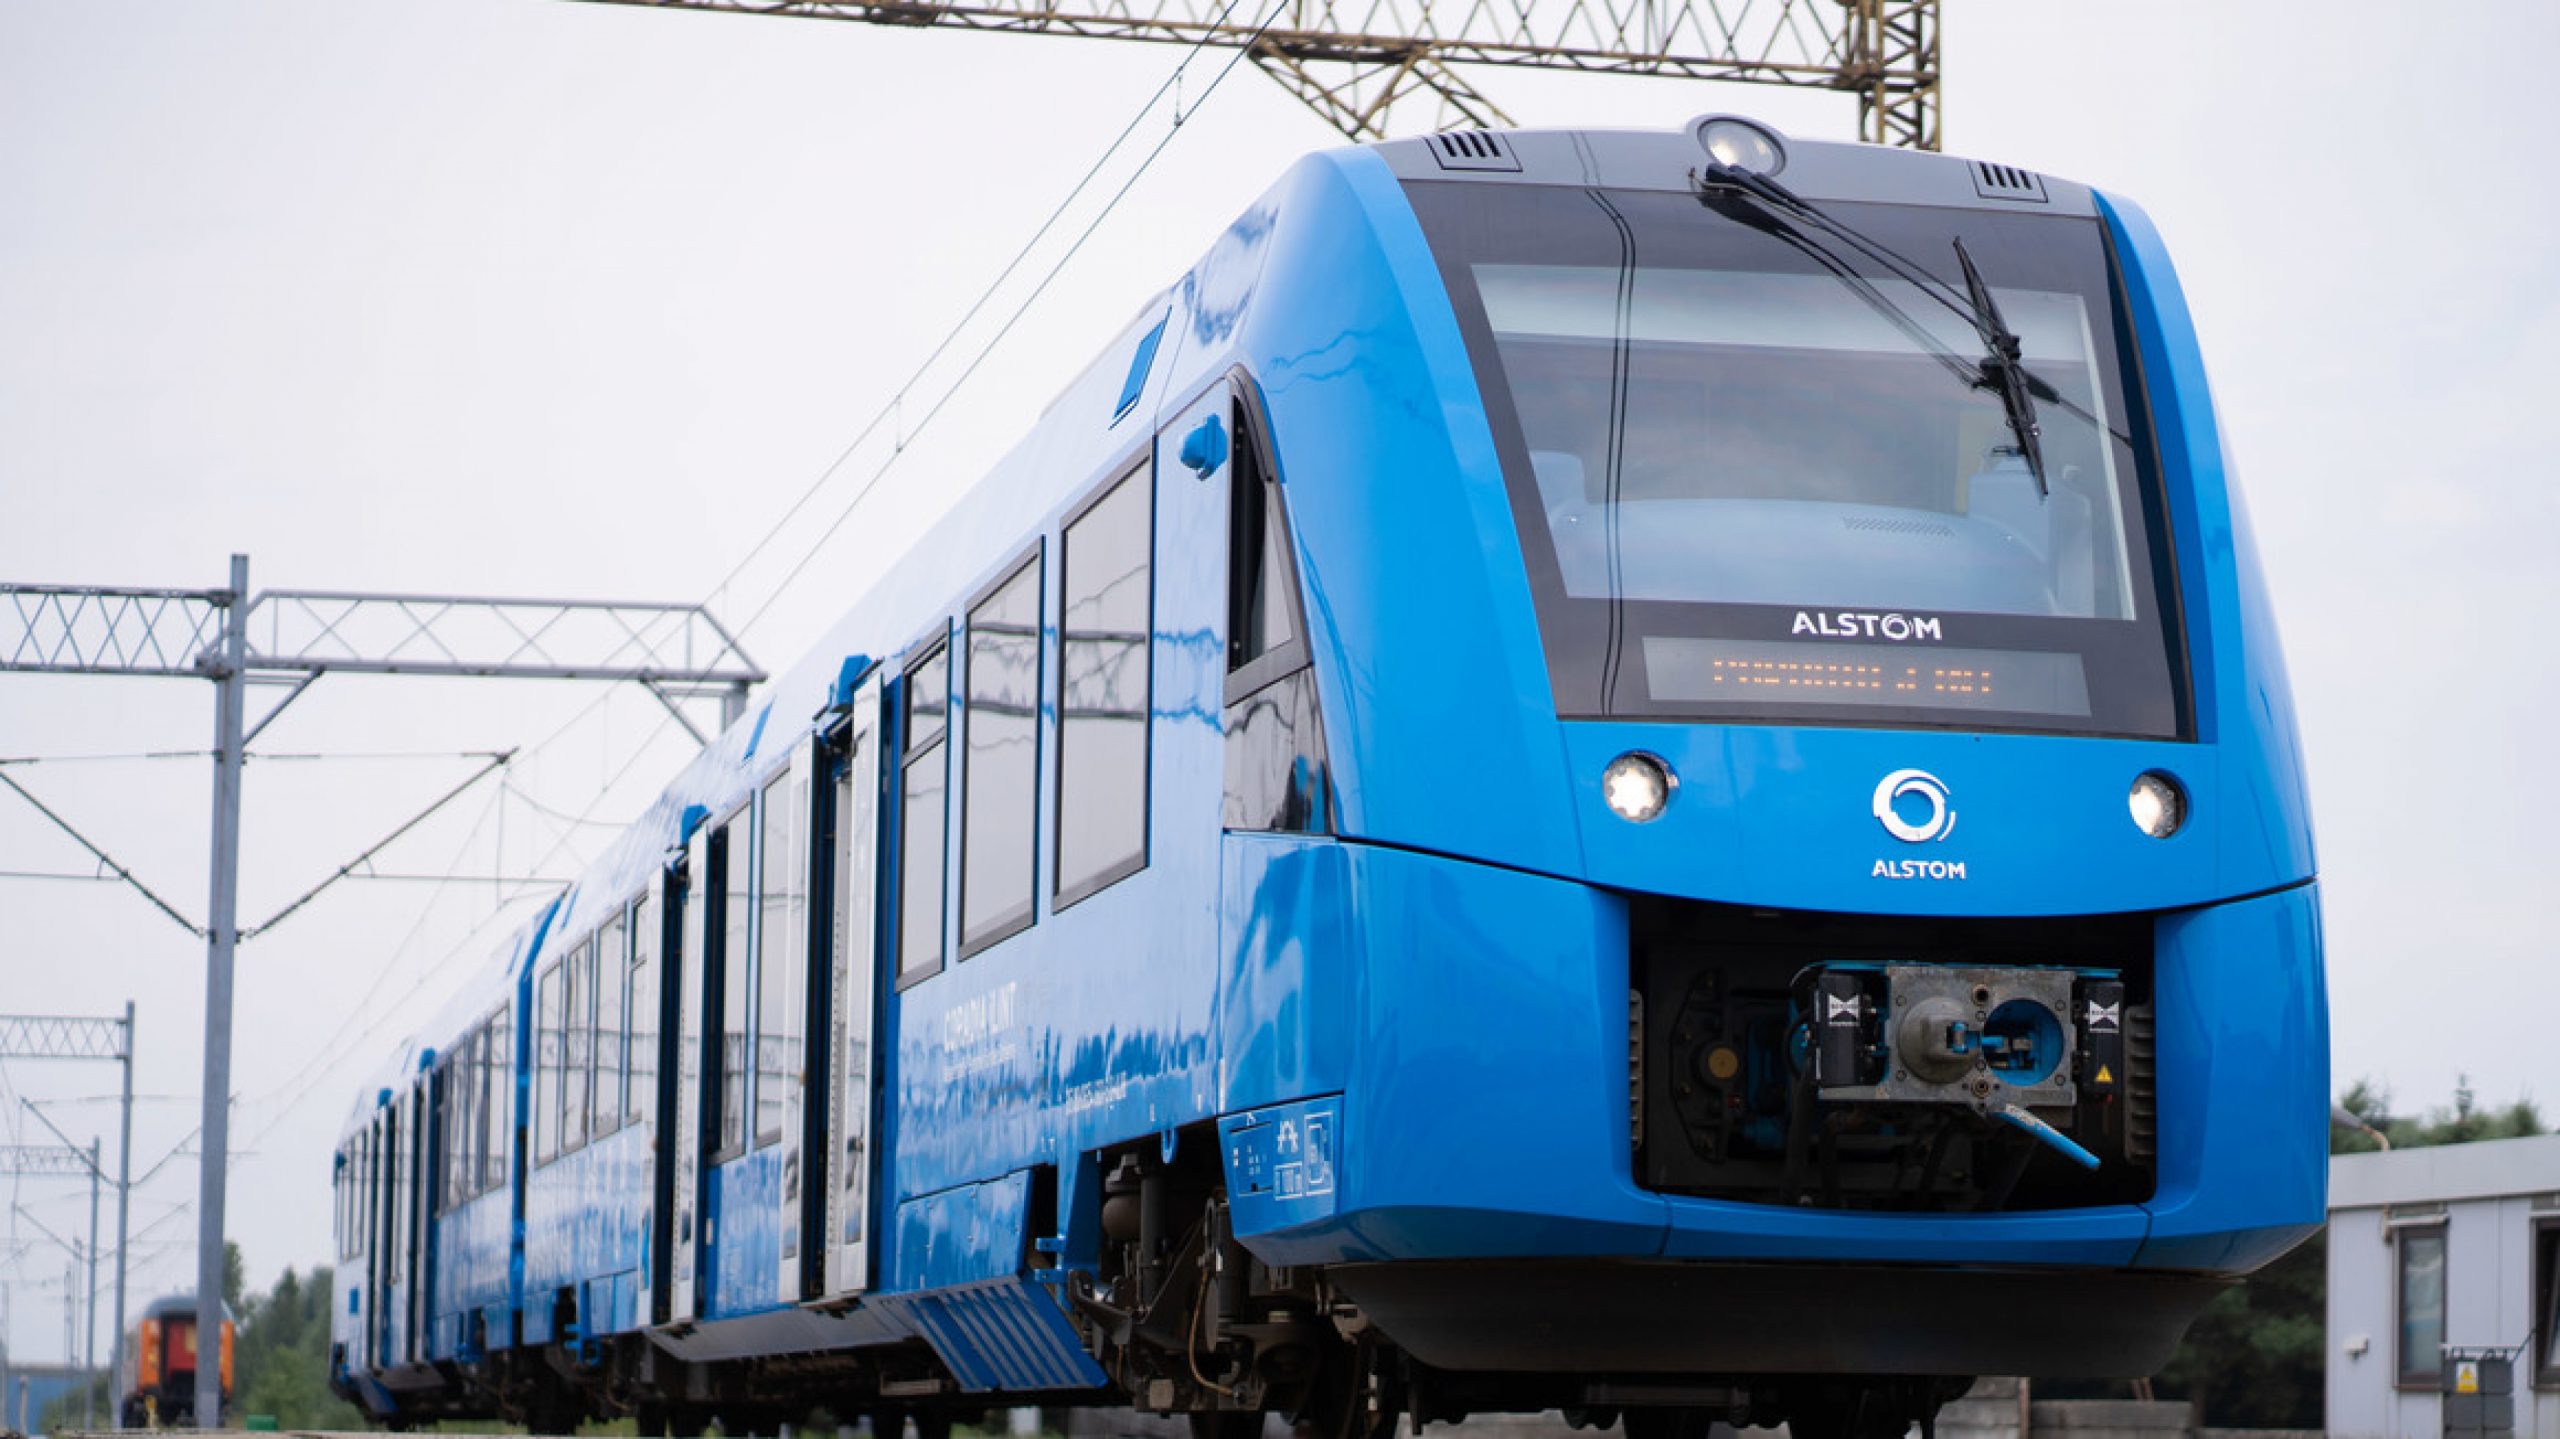 Coradia iLint: Alstom presents the world’s first hydrogen passenger train in Poland